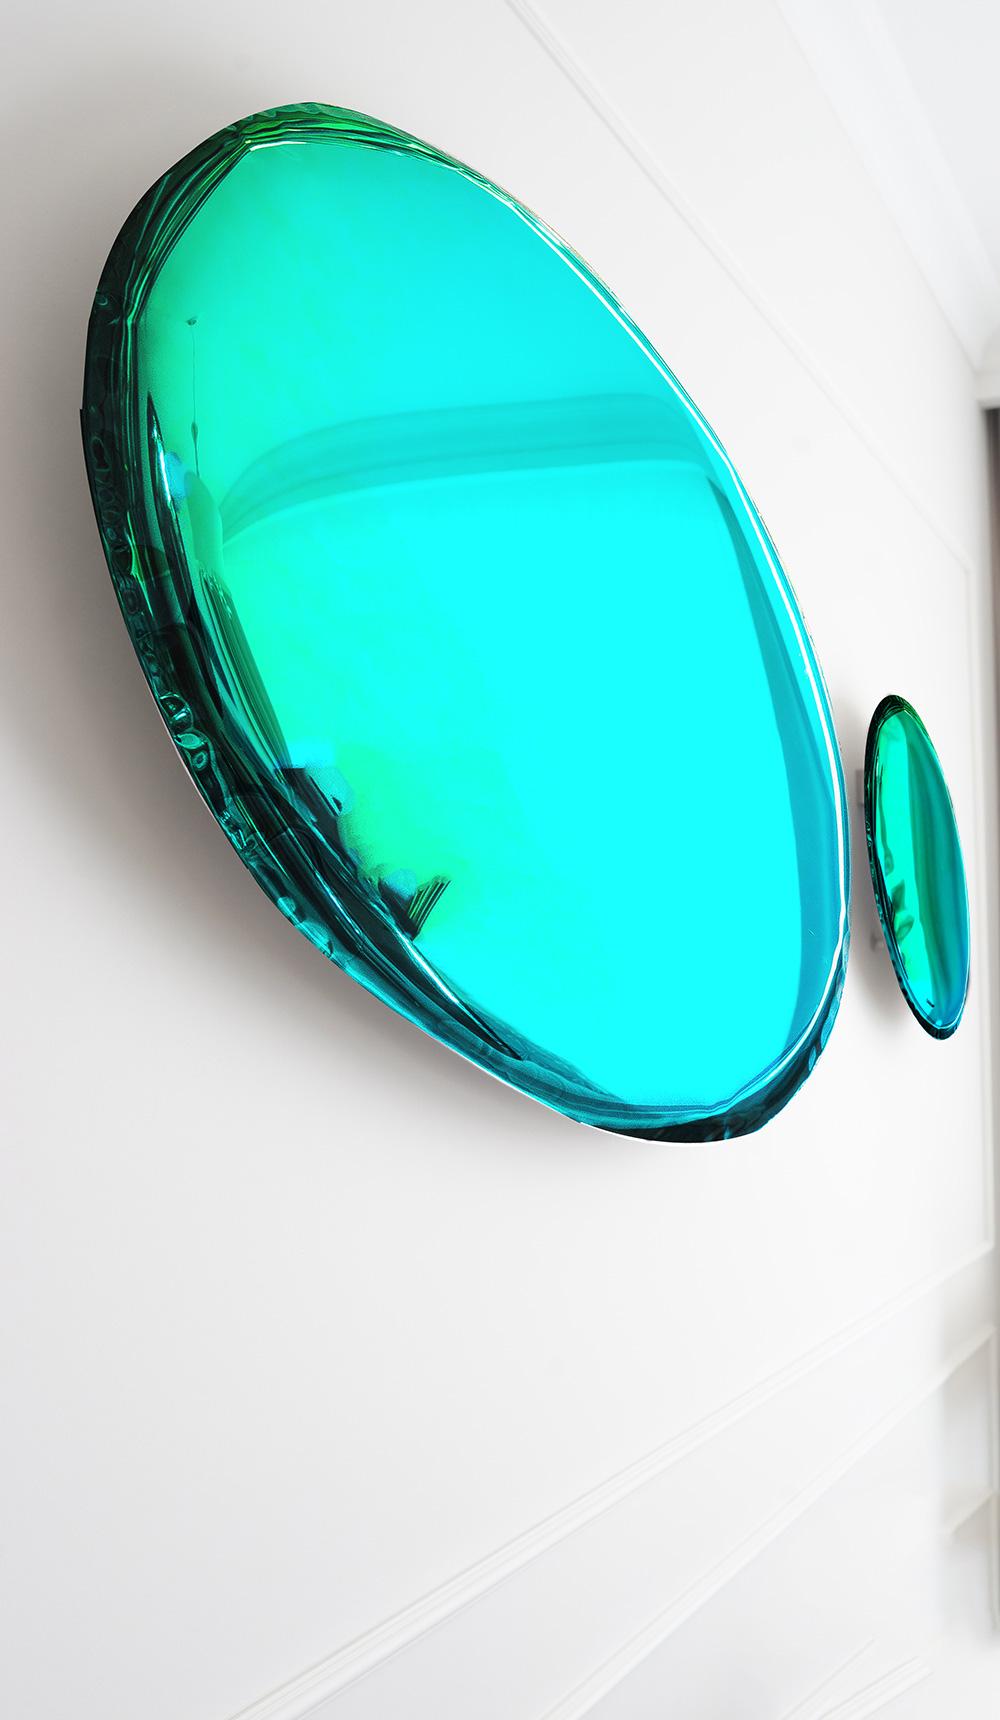 Polish Mirror 'Tafla C4', Stainless Steel by Zieta Prozessdesign, Gradient Collection